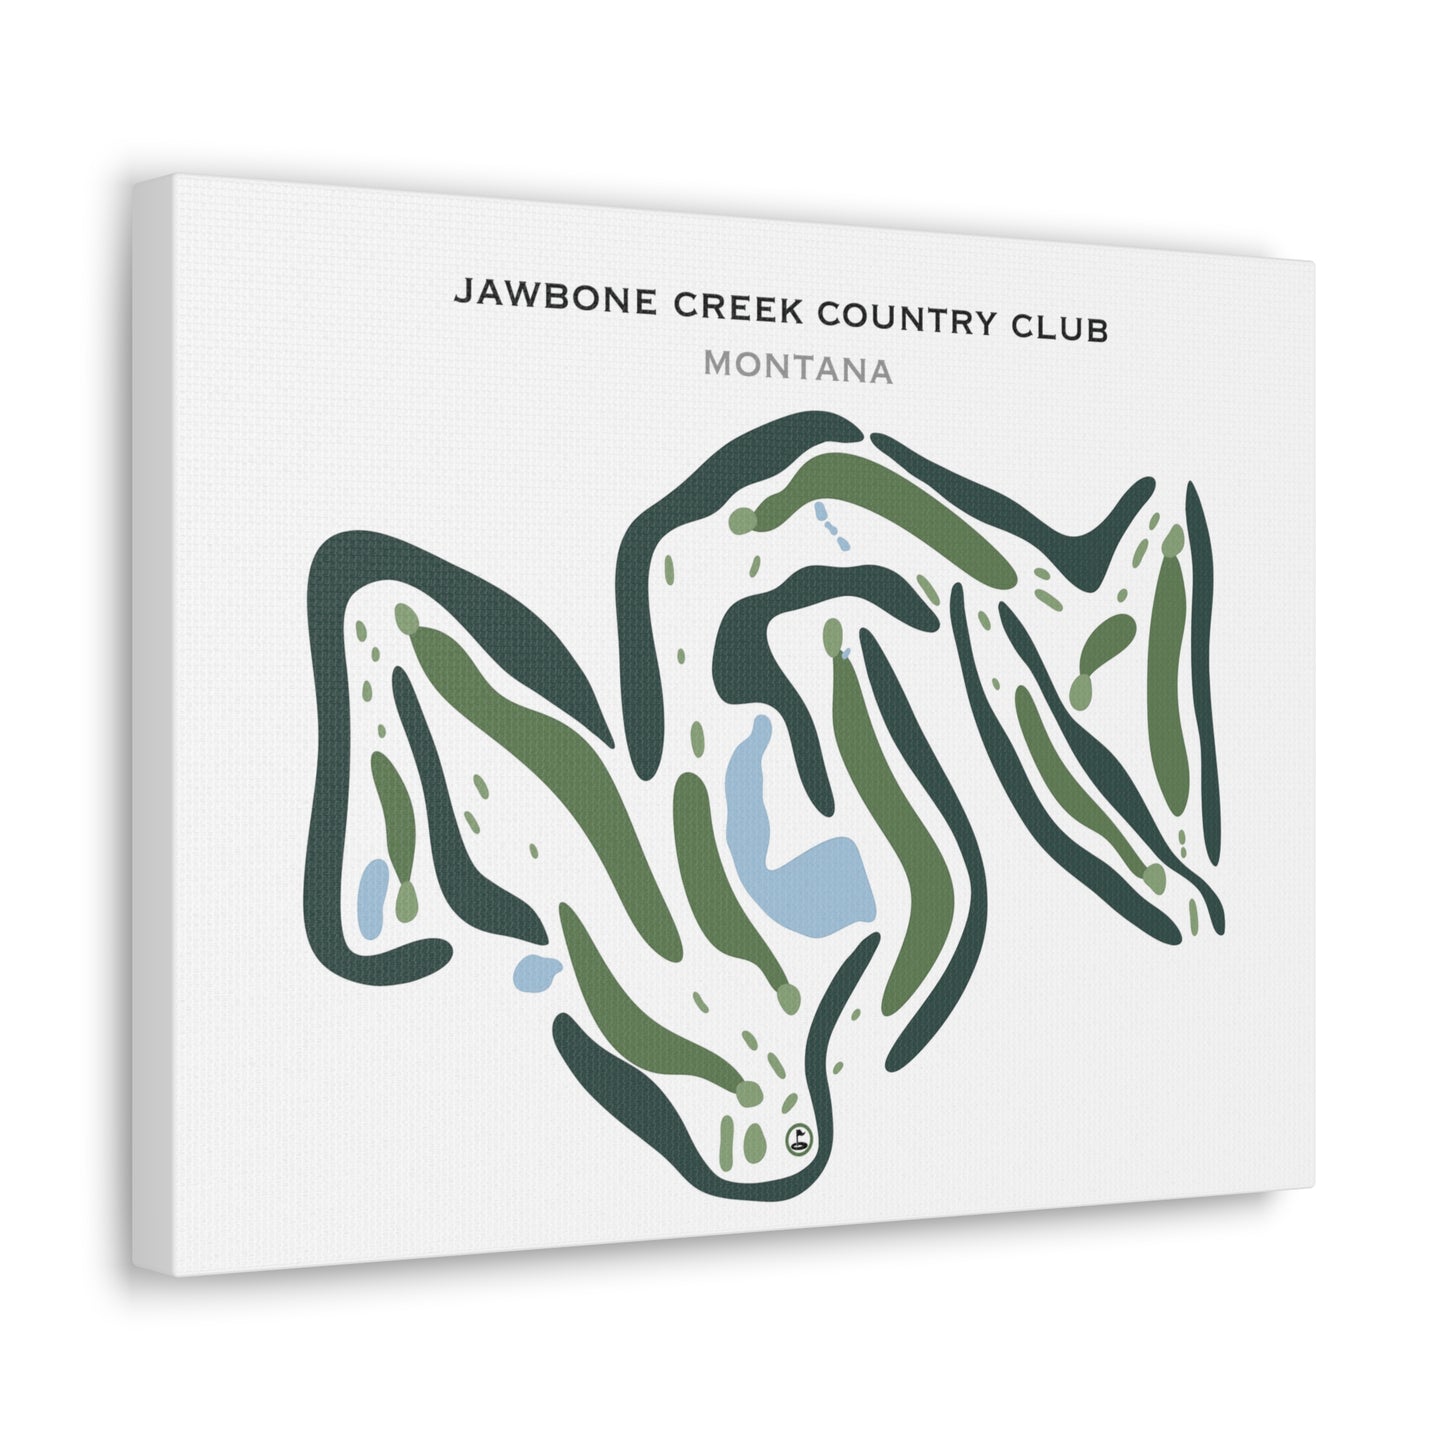 Jawbone Creek Country Club, Montana - Printed Golf Courses